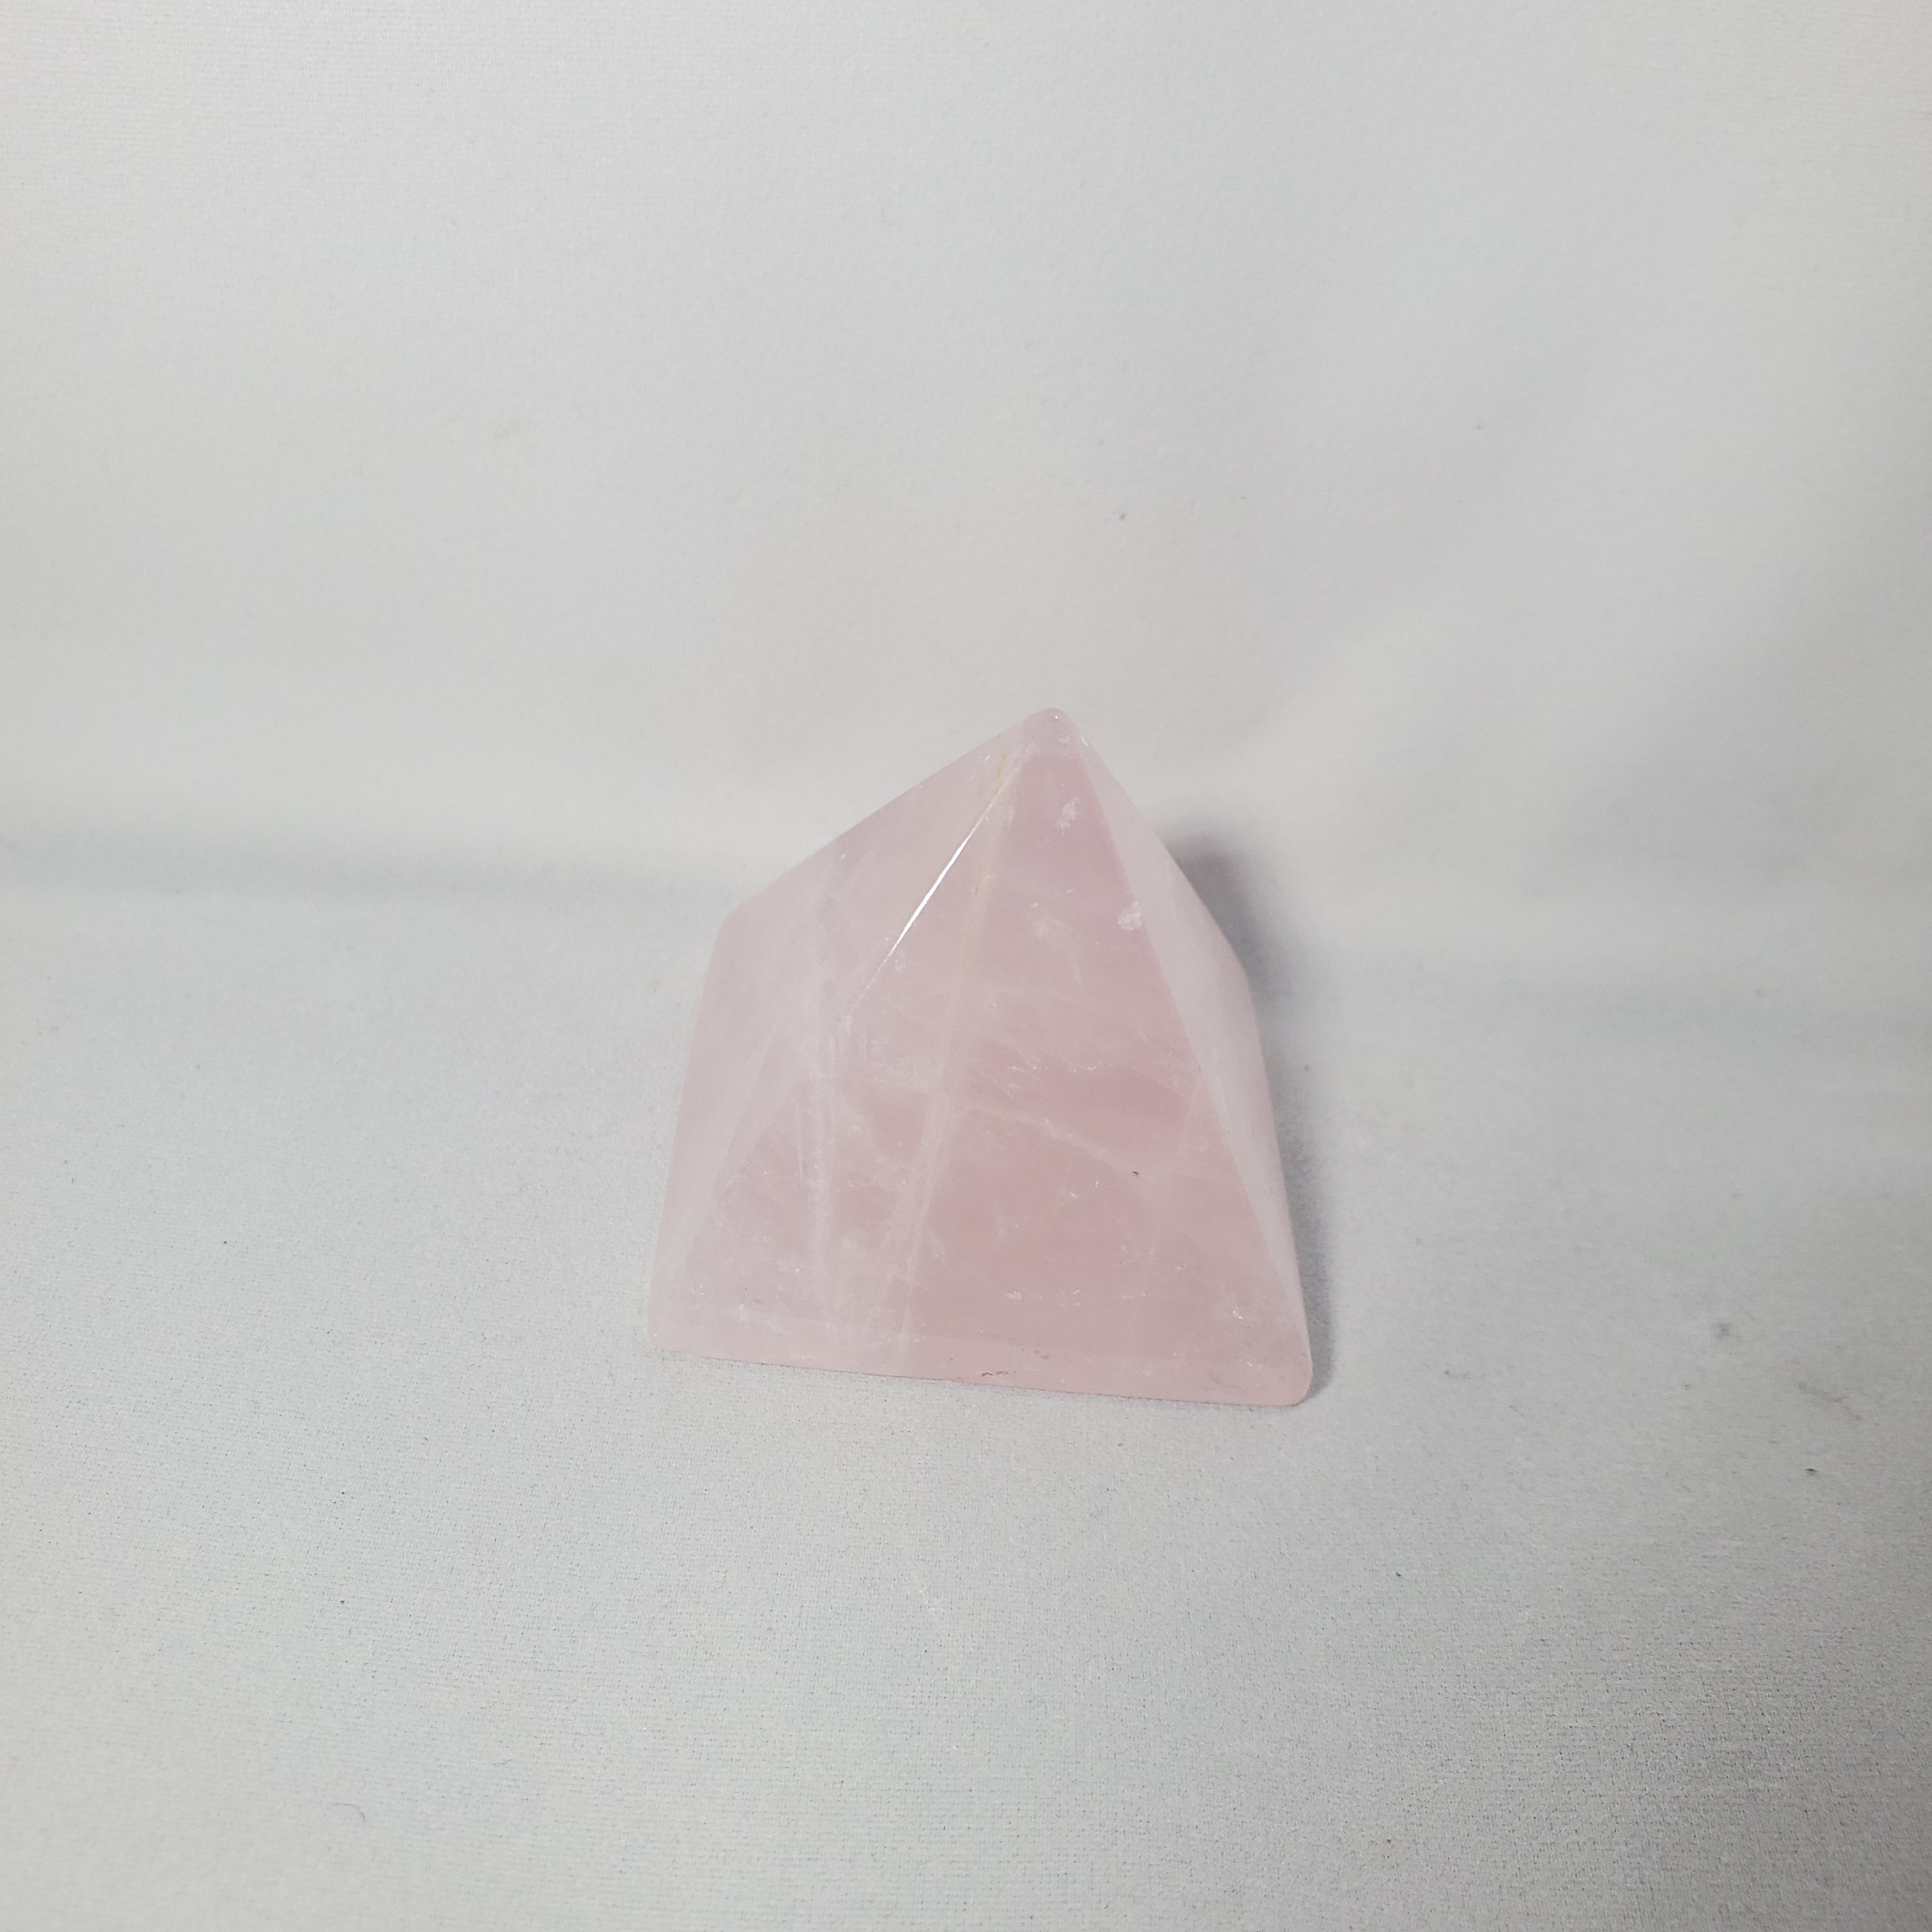 Rose Quartz Pyramid $35 - Lighten Up Shop